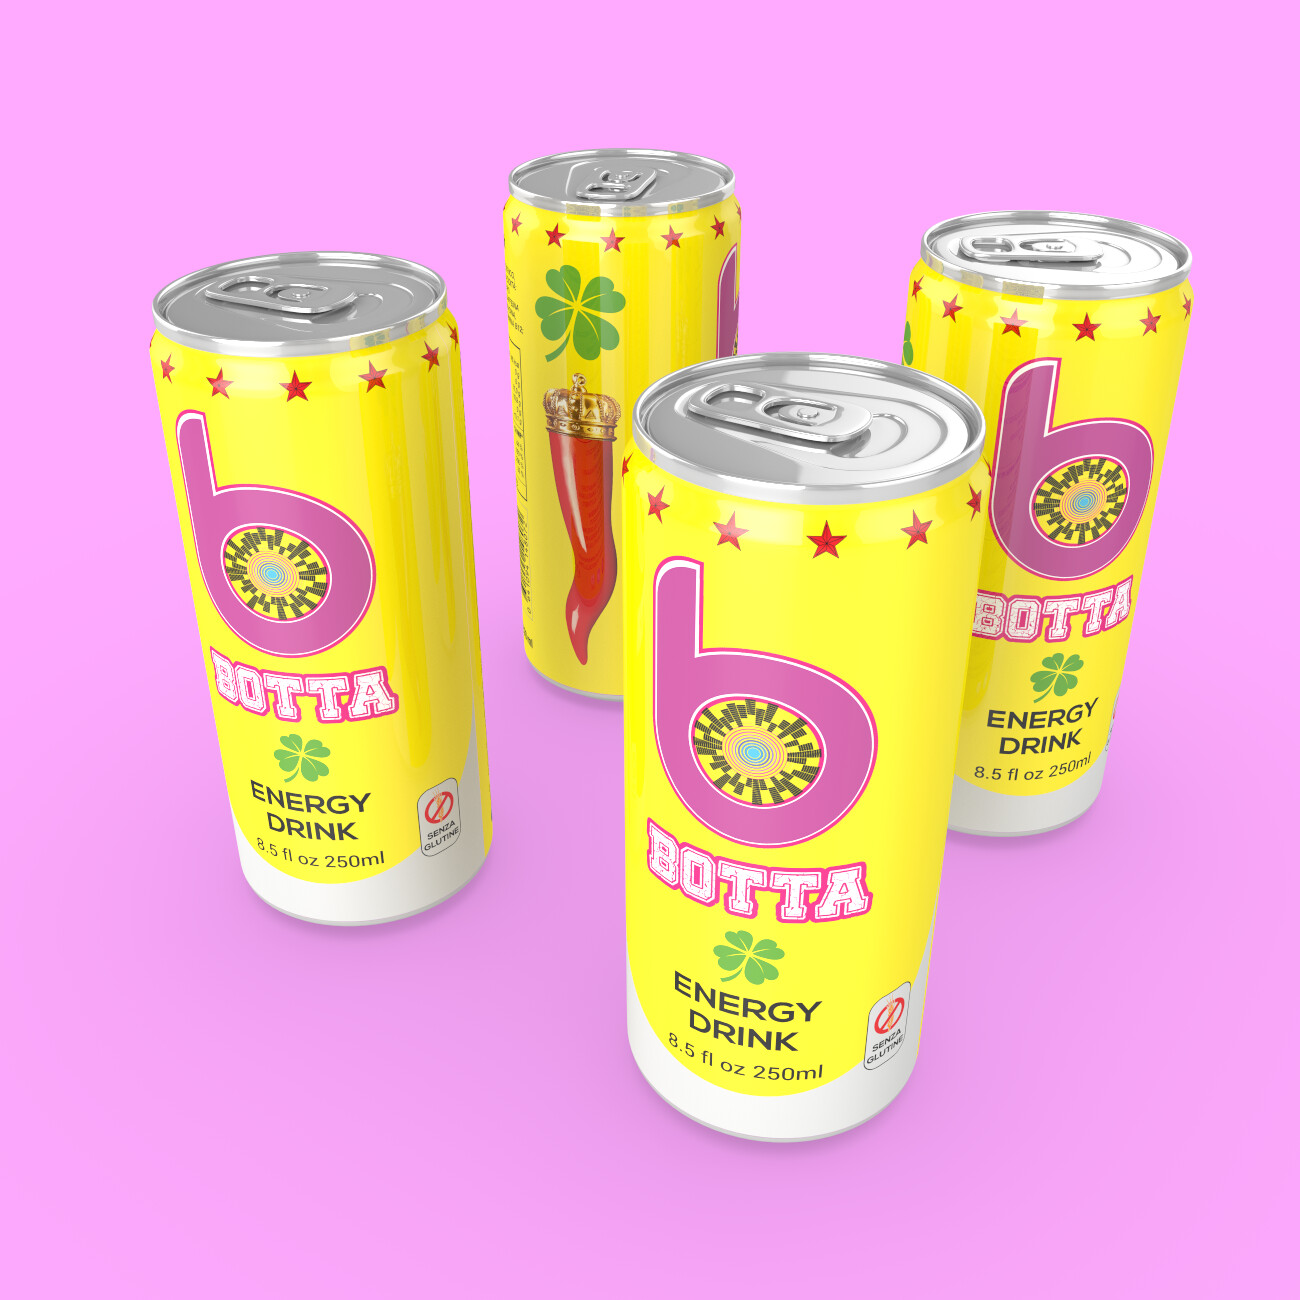 Botta Energy Drink 250ml (Pack 4 lattine)